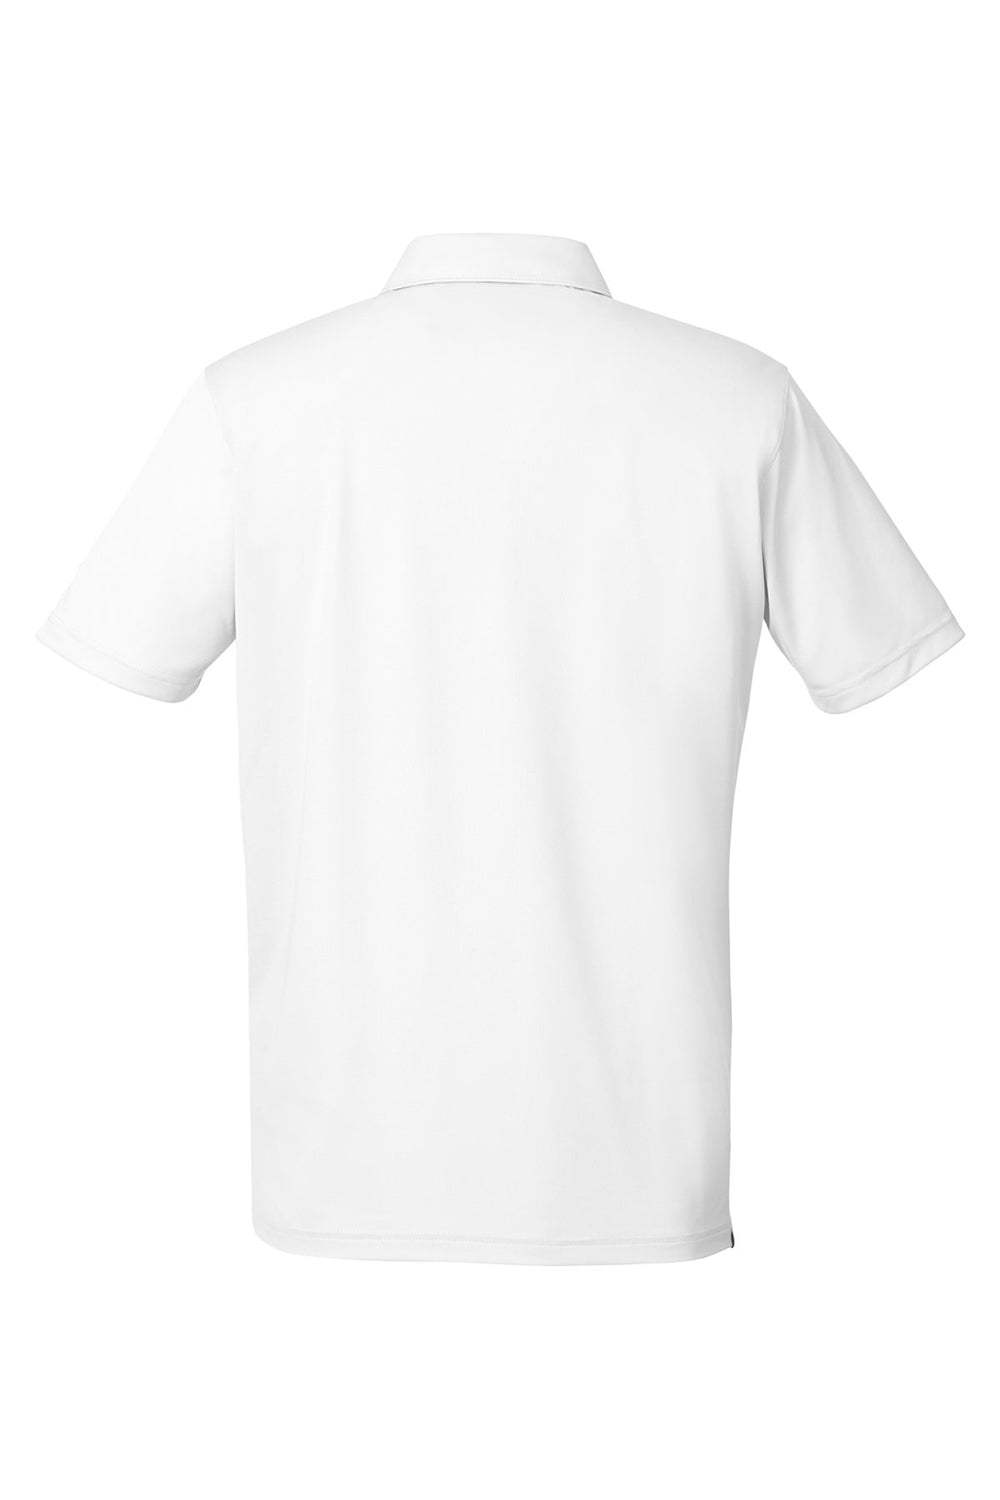 Puma 599120 Mens Gamer Short Sleeve Polo Shirt Bright White Flat Back